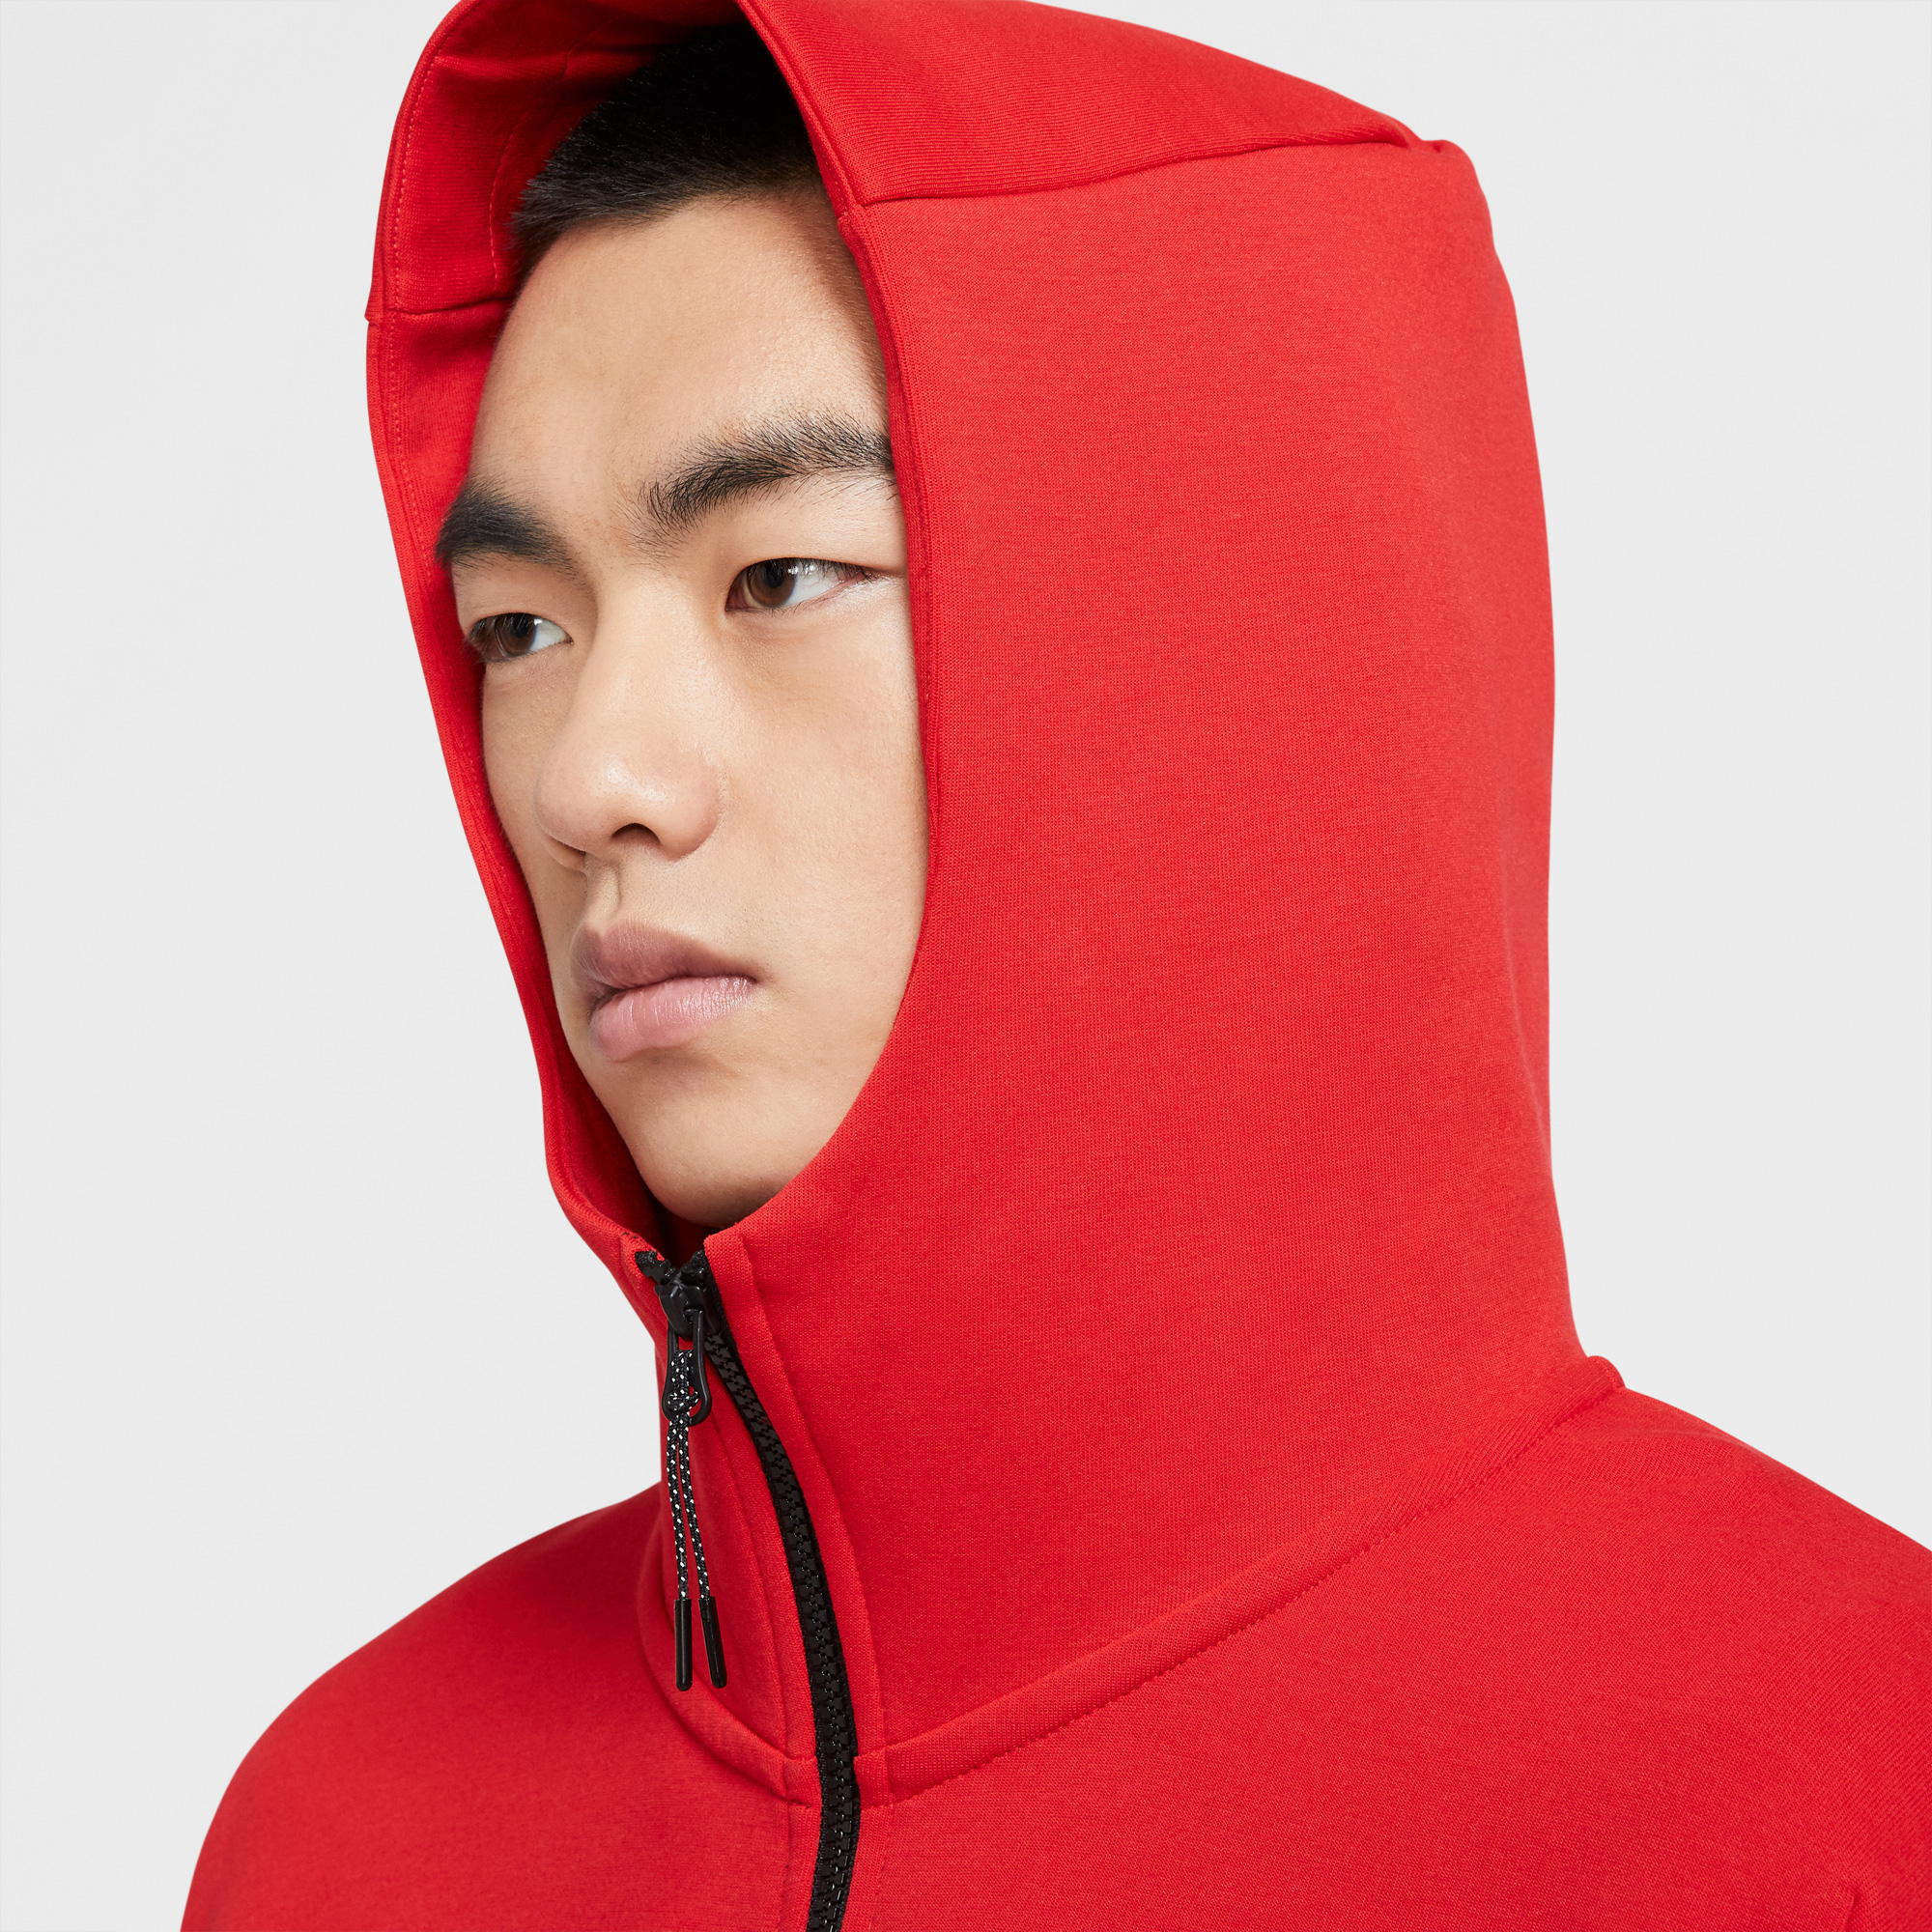 Nike Sportswear Erkek Kırmızı Sweatshirt